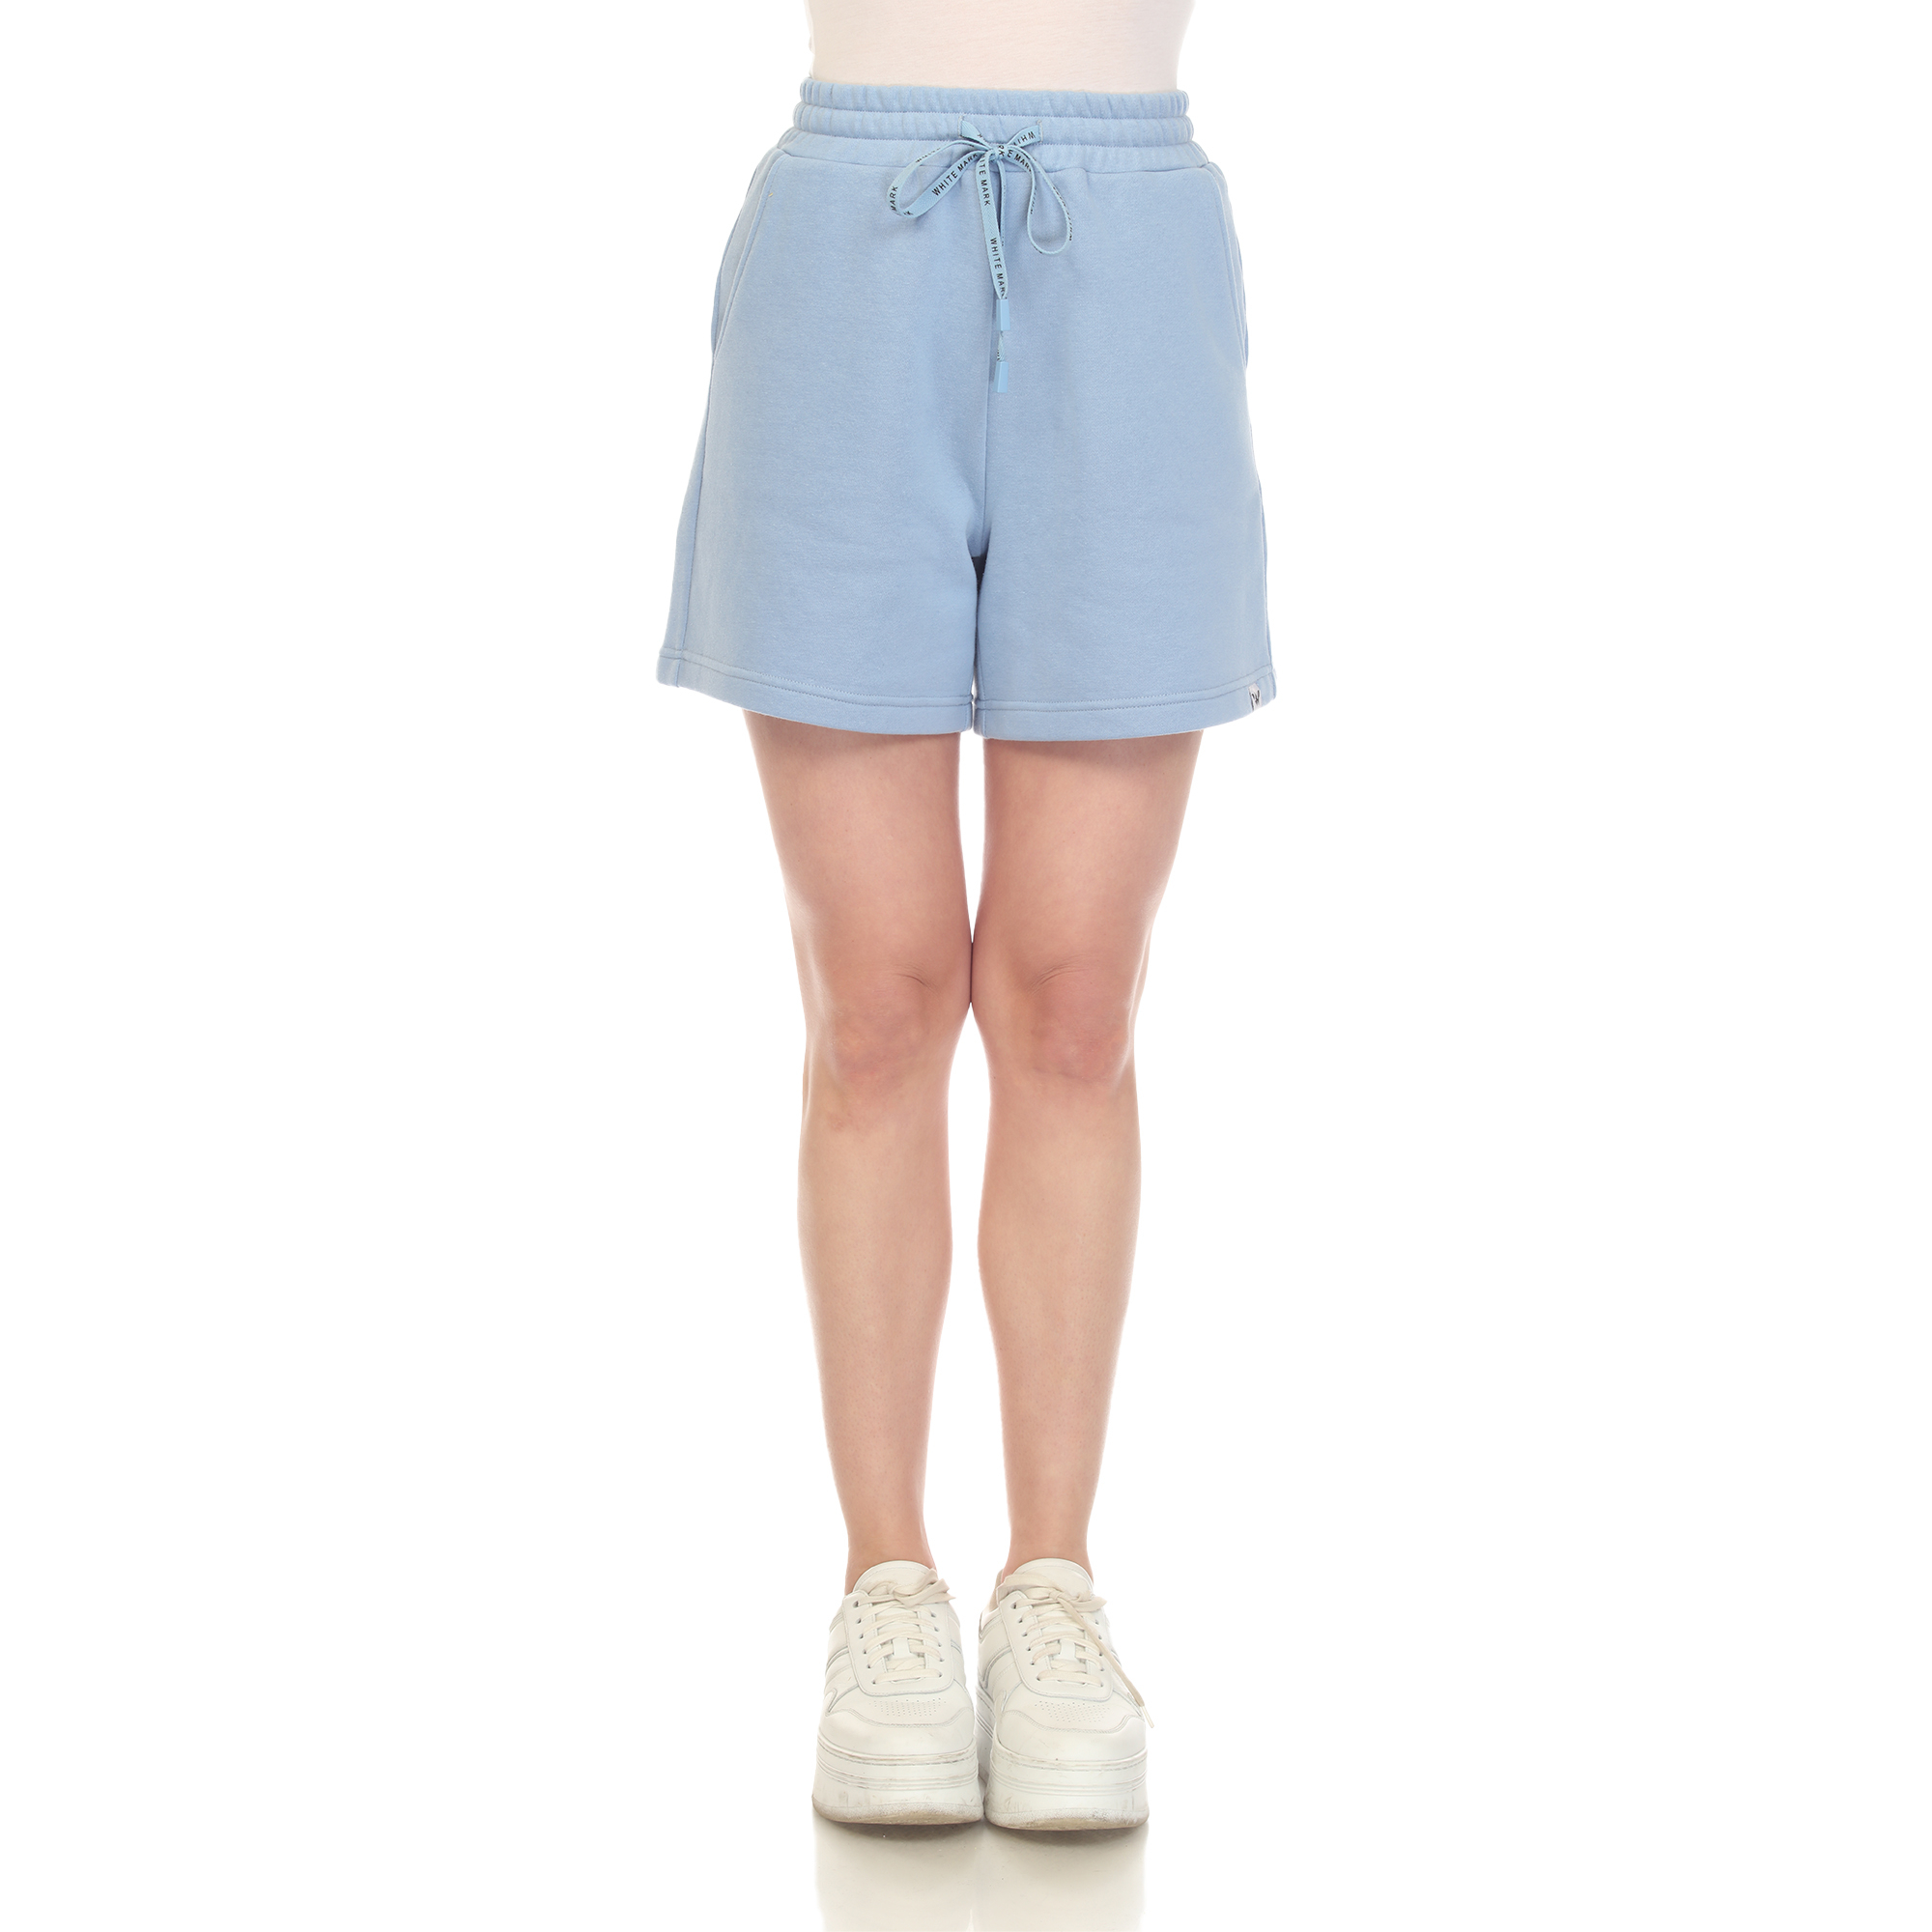 White Mark Women's Super Soft Drawstring Waistband Sweat Shorts - Denim Blue, Medium